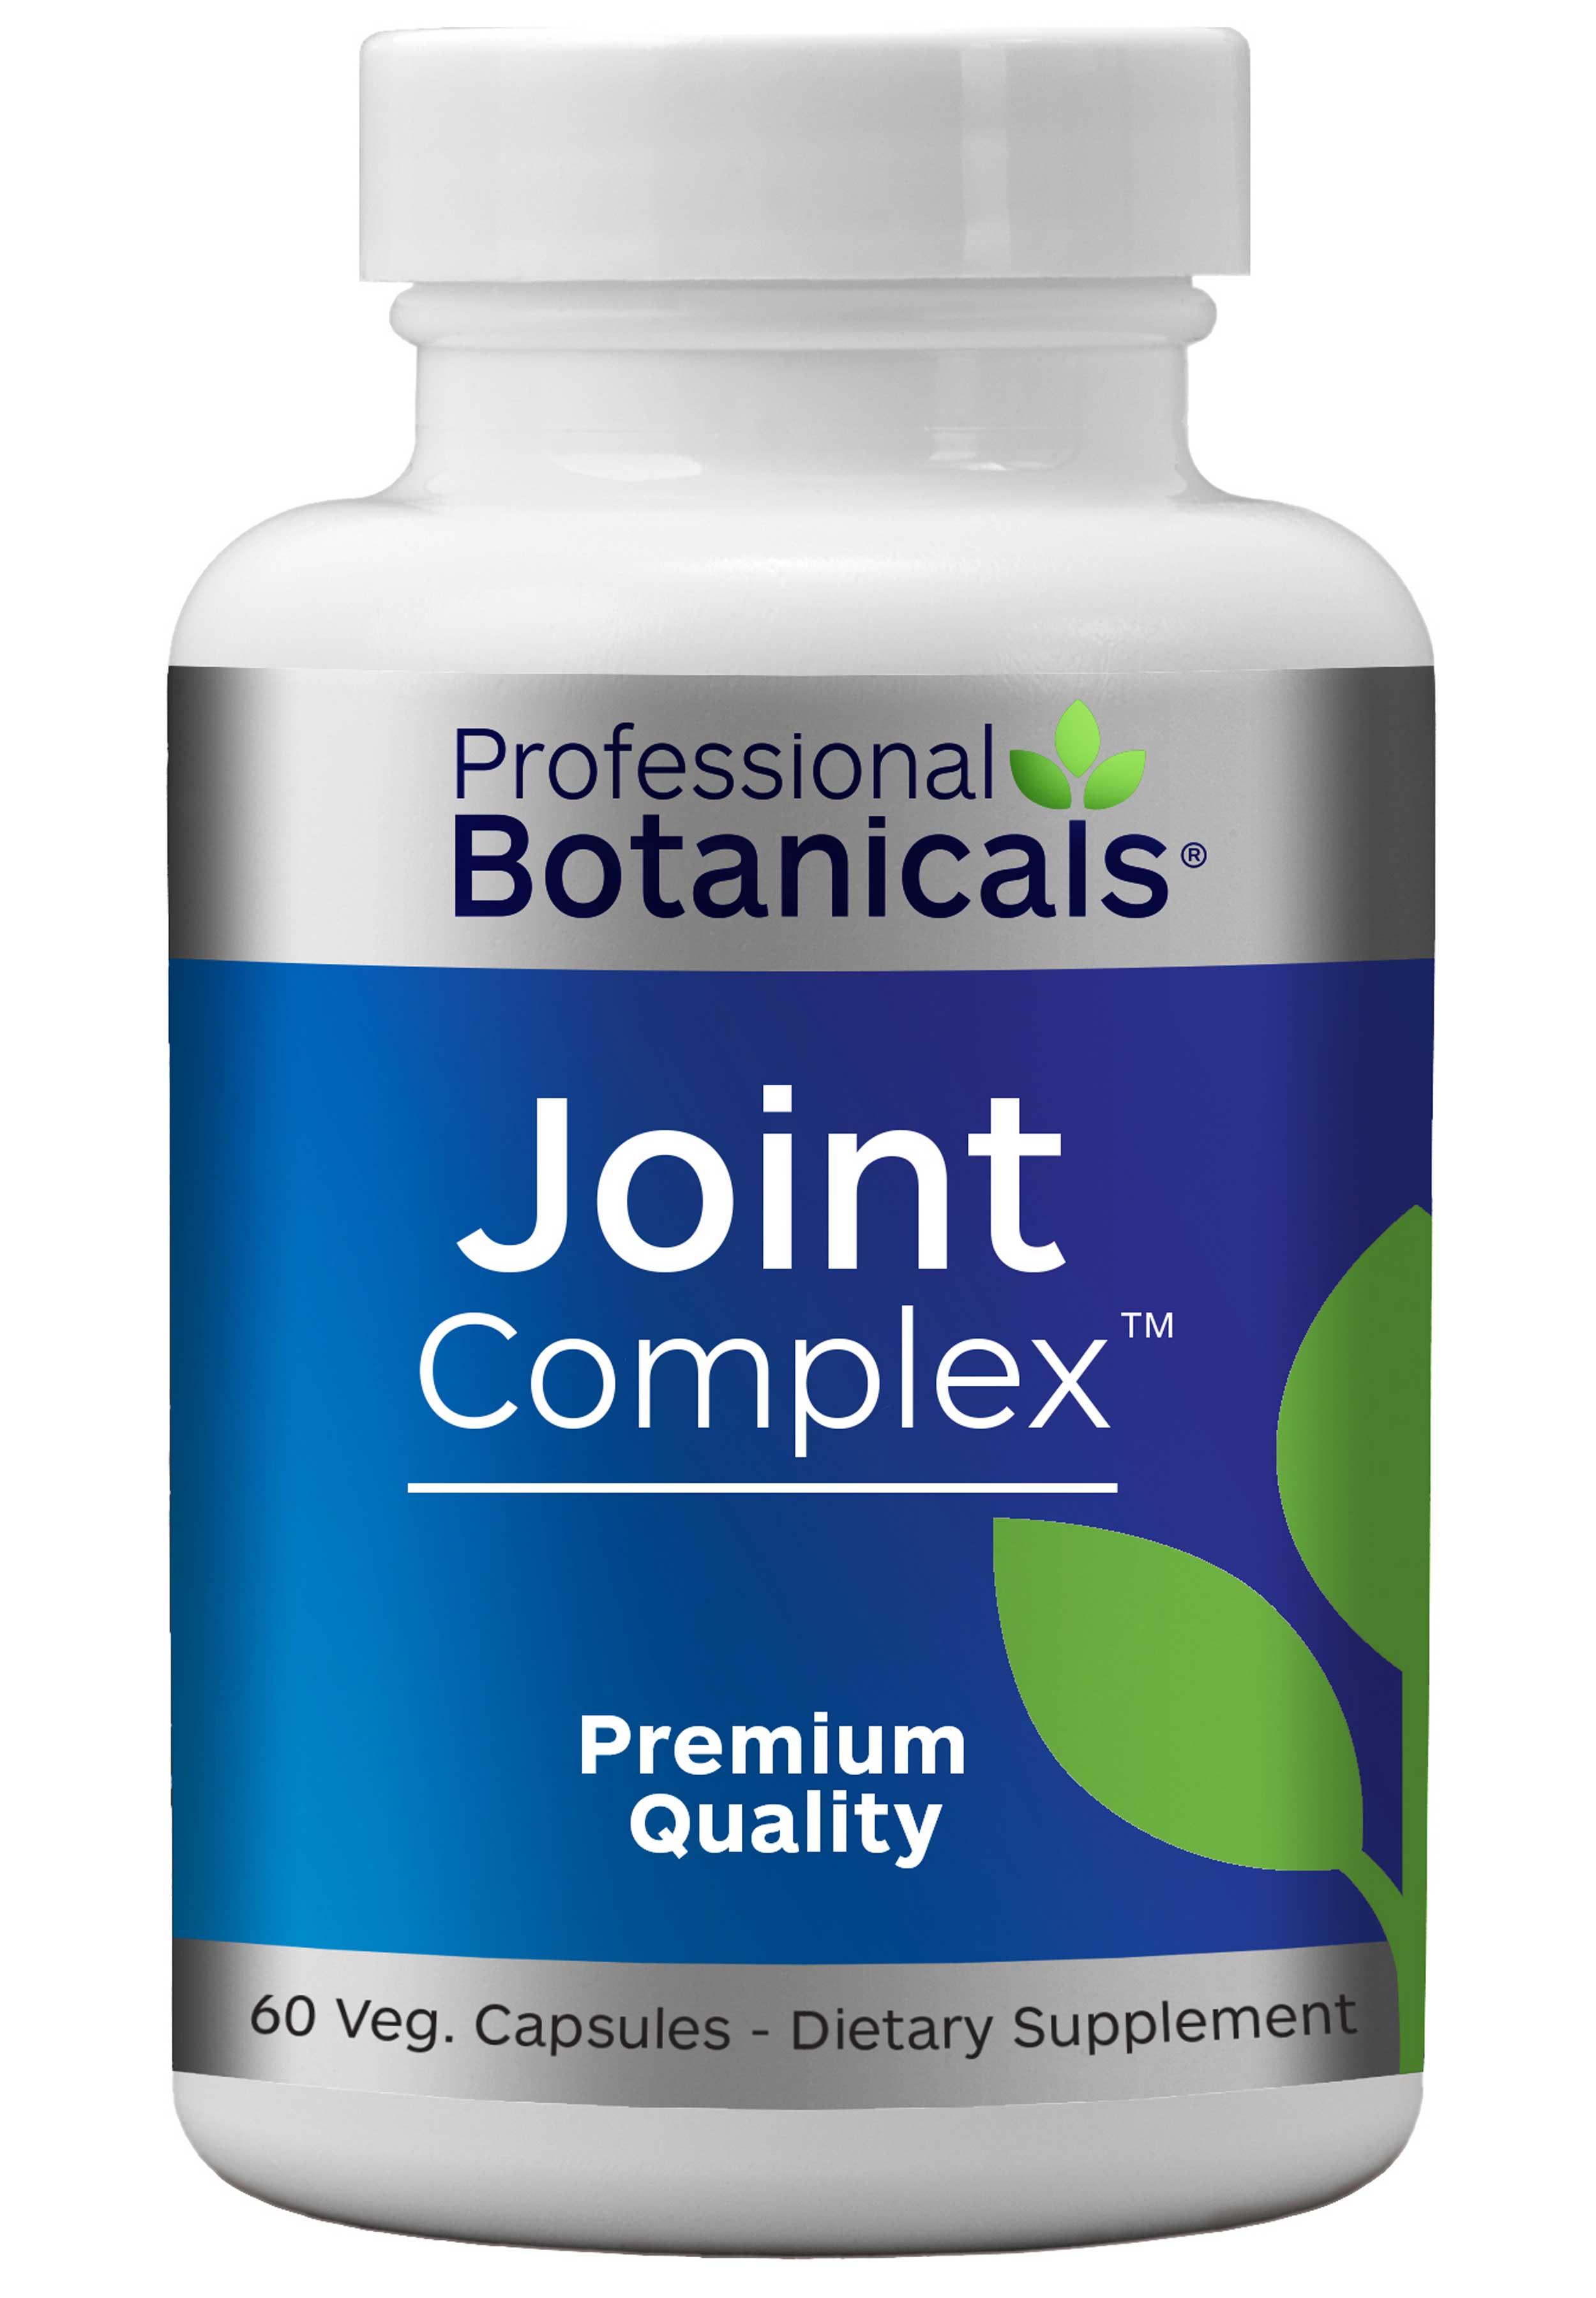 Professional Botanicals Joint Complex